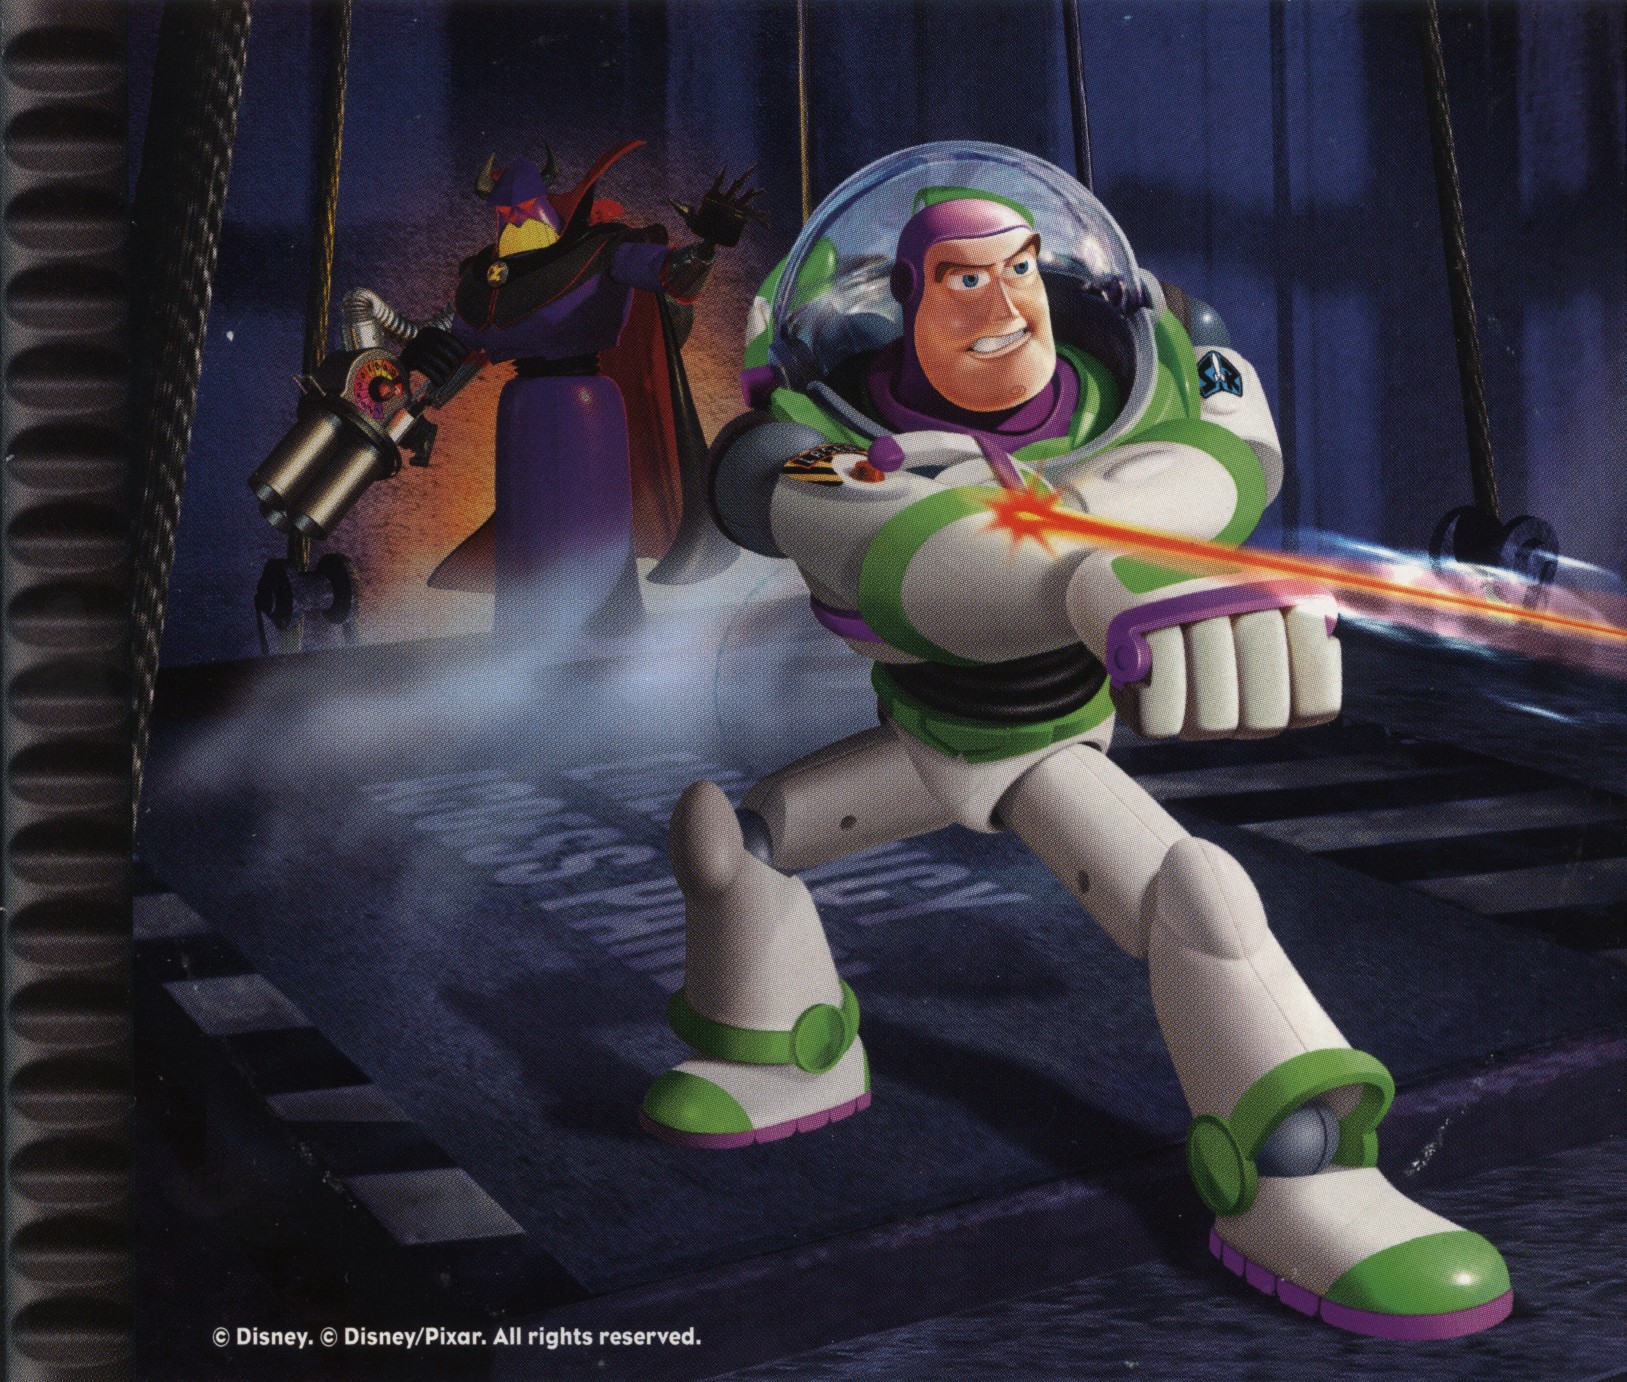 Disney / Pixar - Toy Story 2 - Buzz Lightyear to the rescue! 